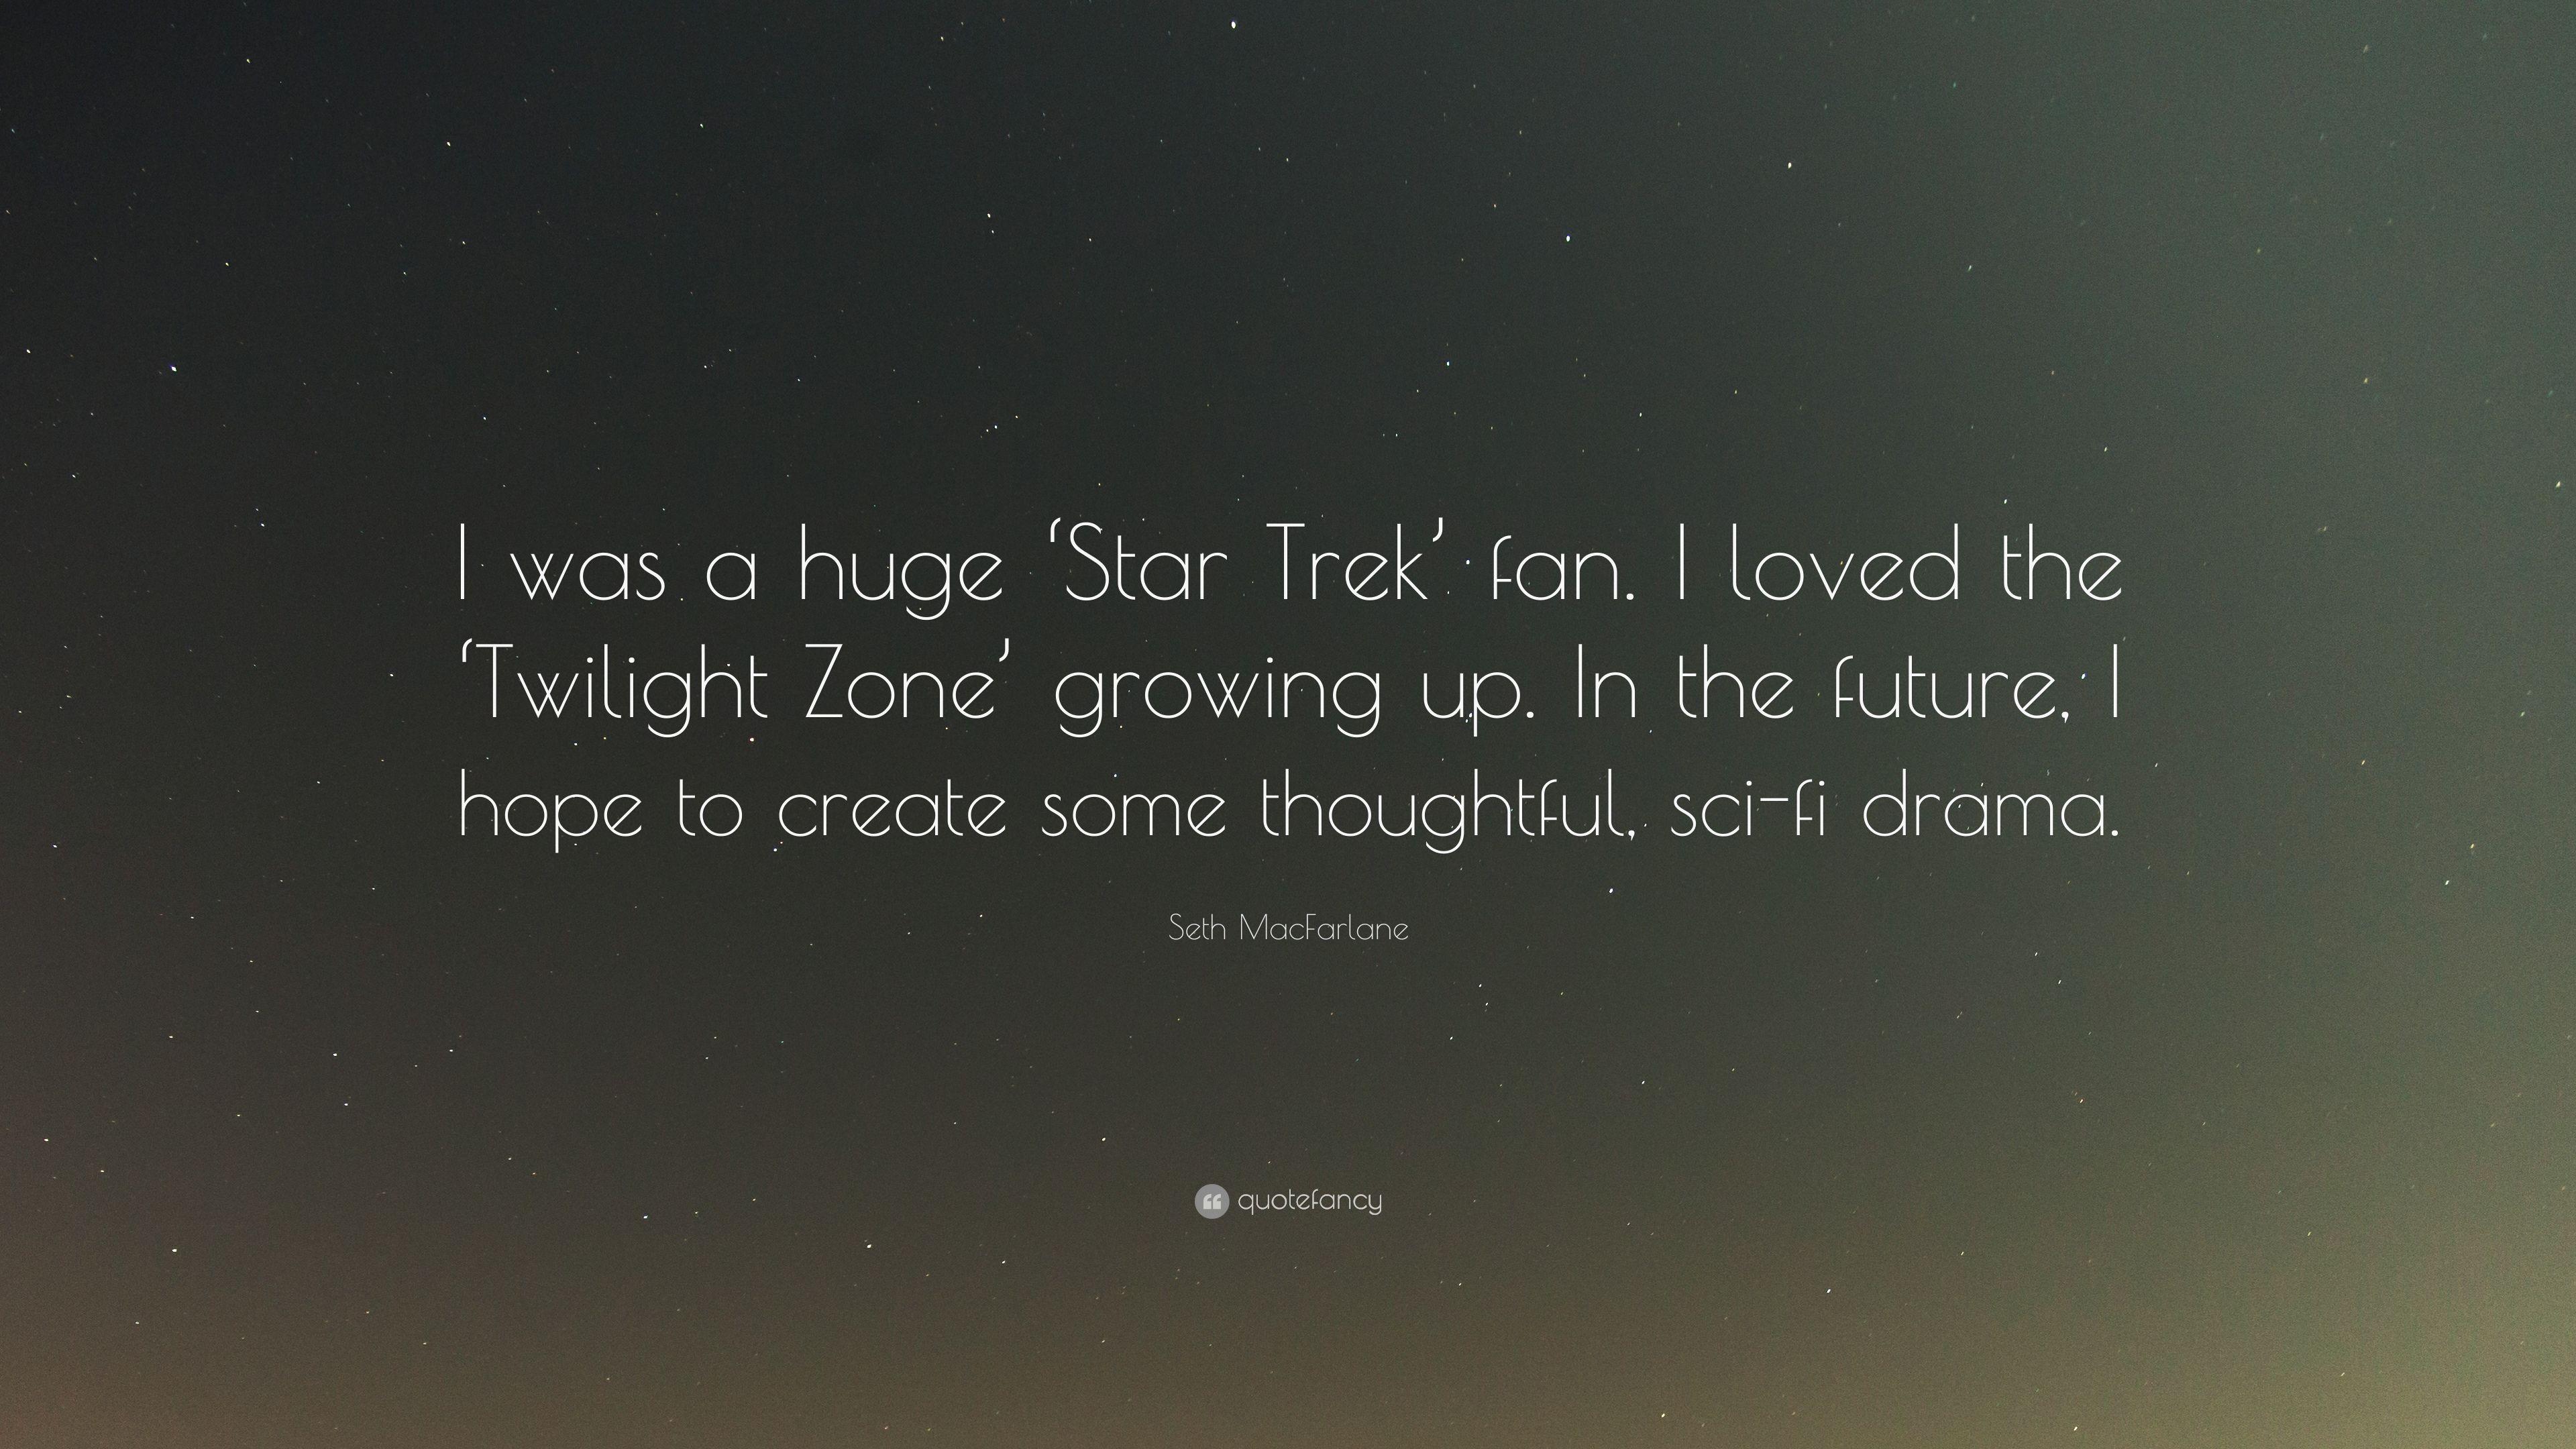 Seth MacFarlane Quote: “I was a huge 'Star Trek' fan. I loved